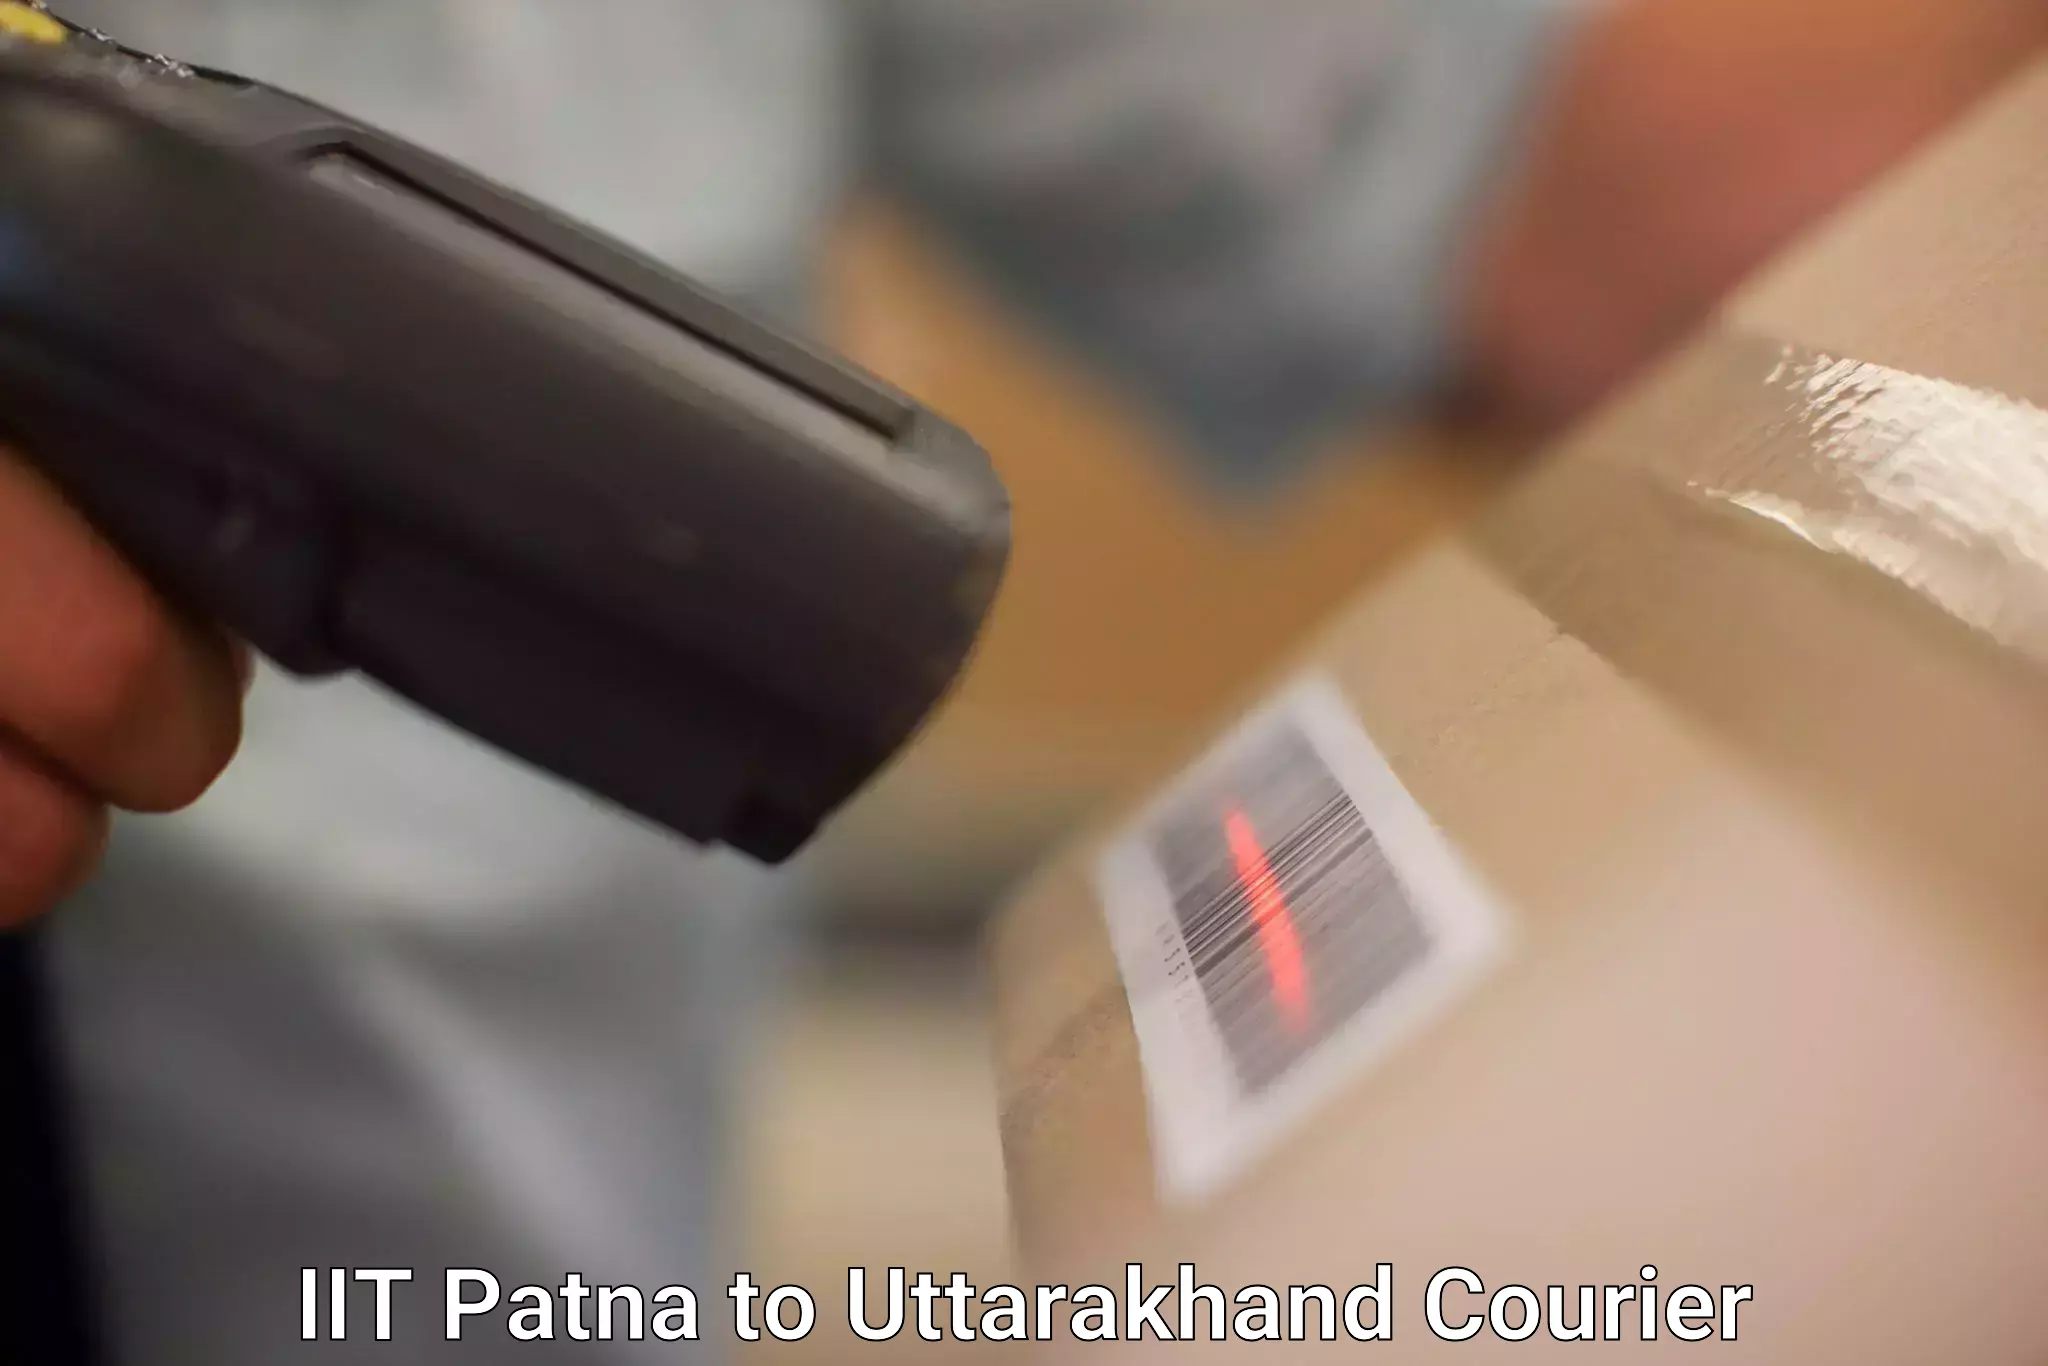 Urgent courier needs IIT Patna to Khatima